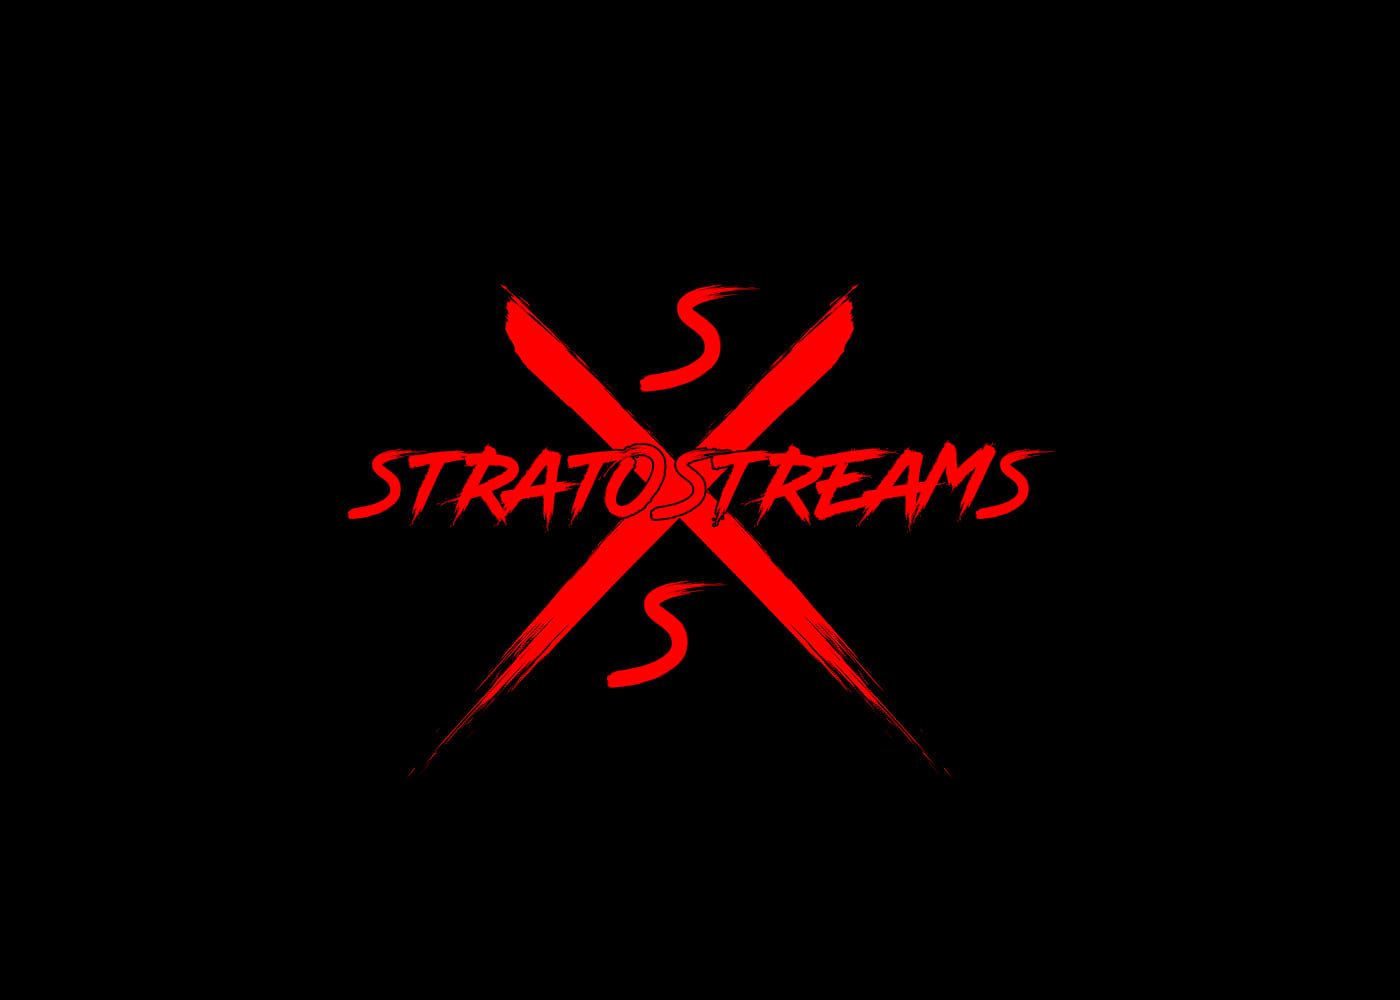 Stratostreams